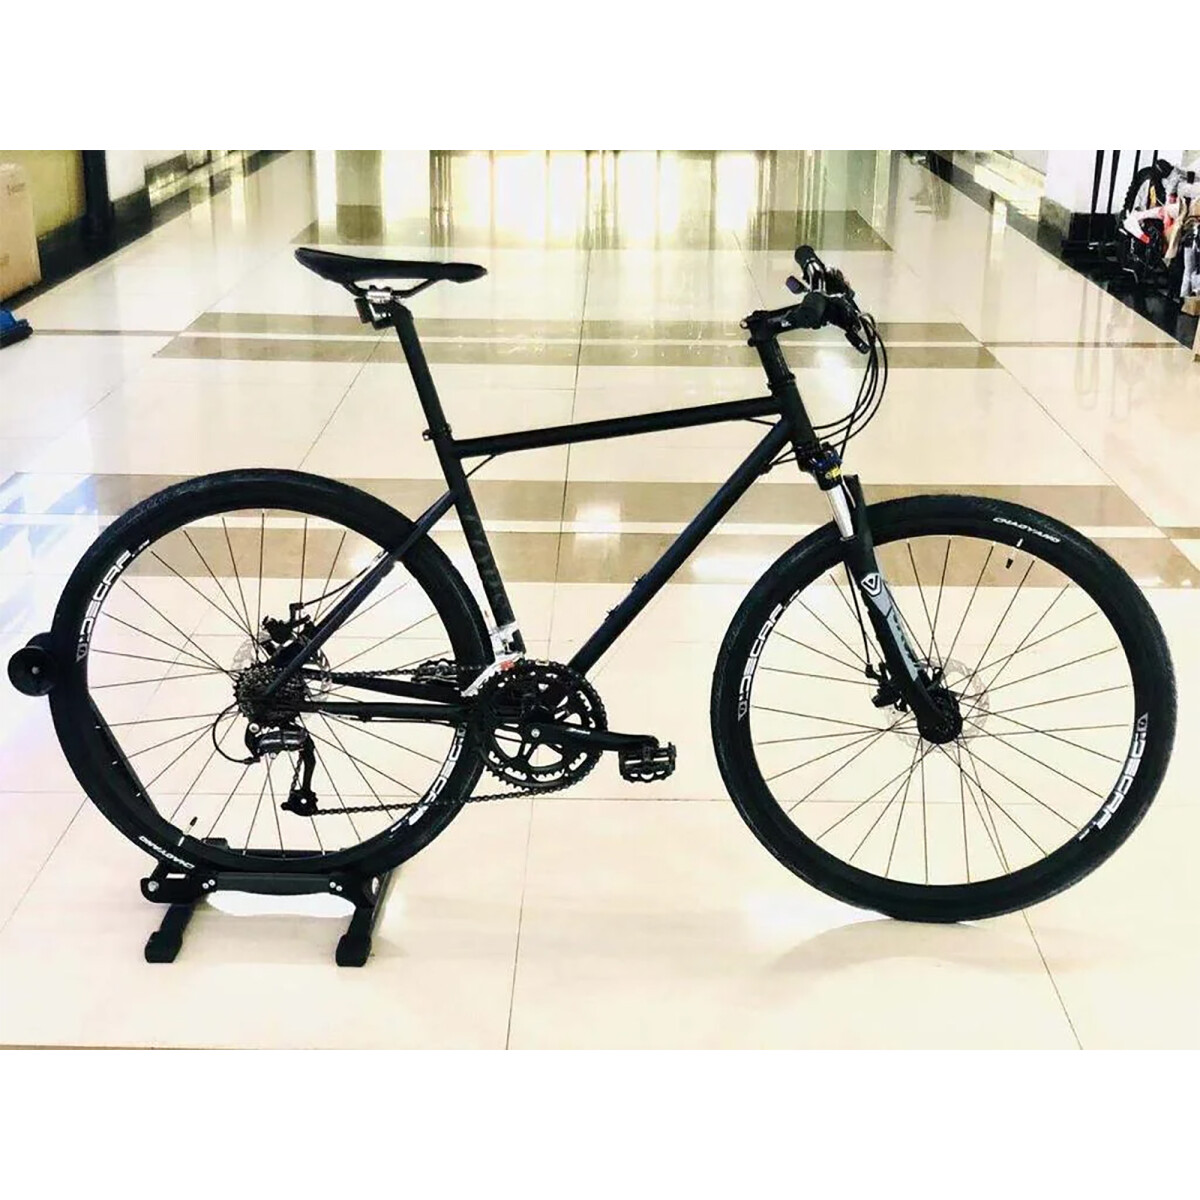 Java - Bicicleta de Ciudad Corsa - Acero. 14V. 700C. - 001 